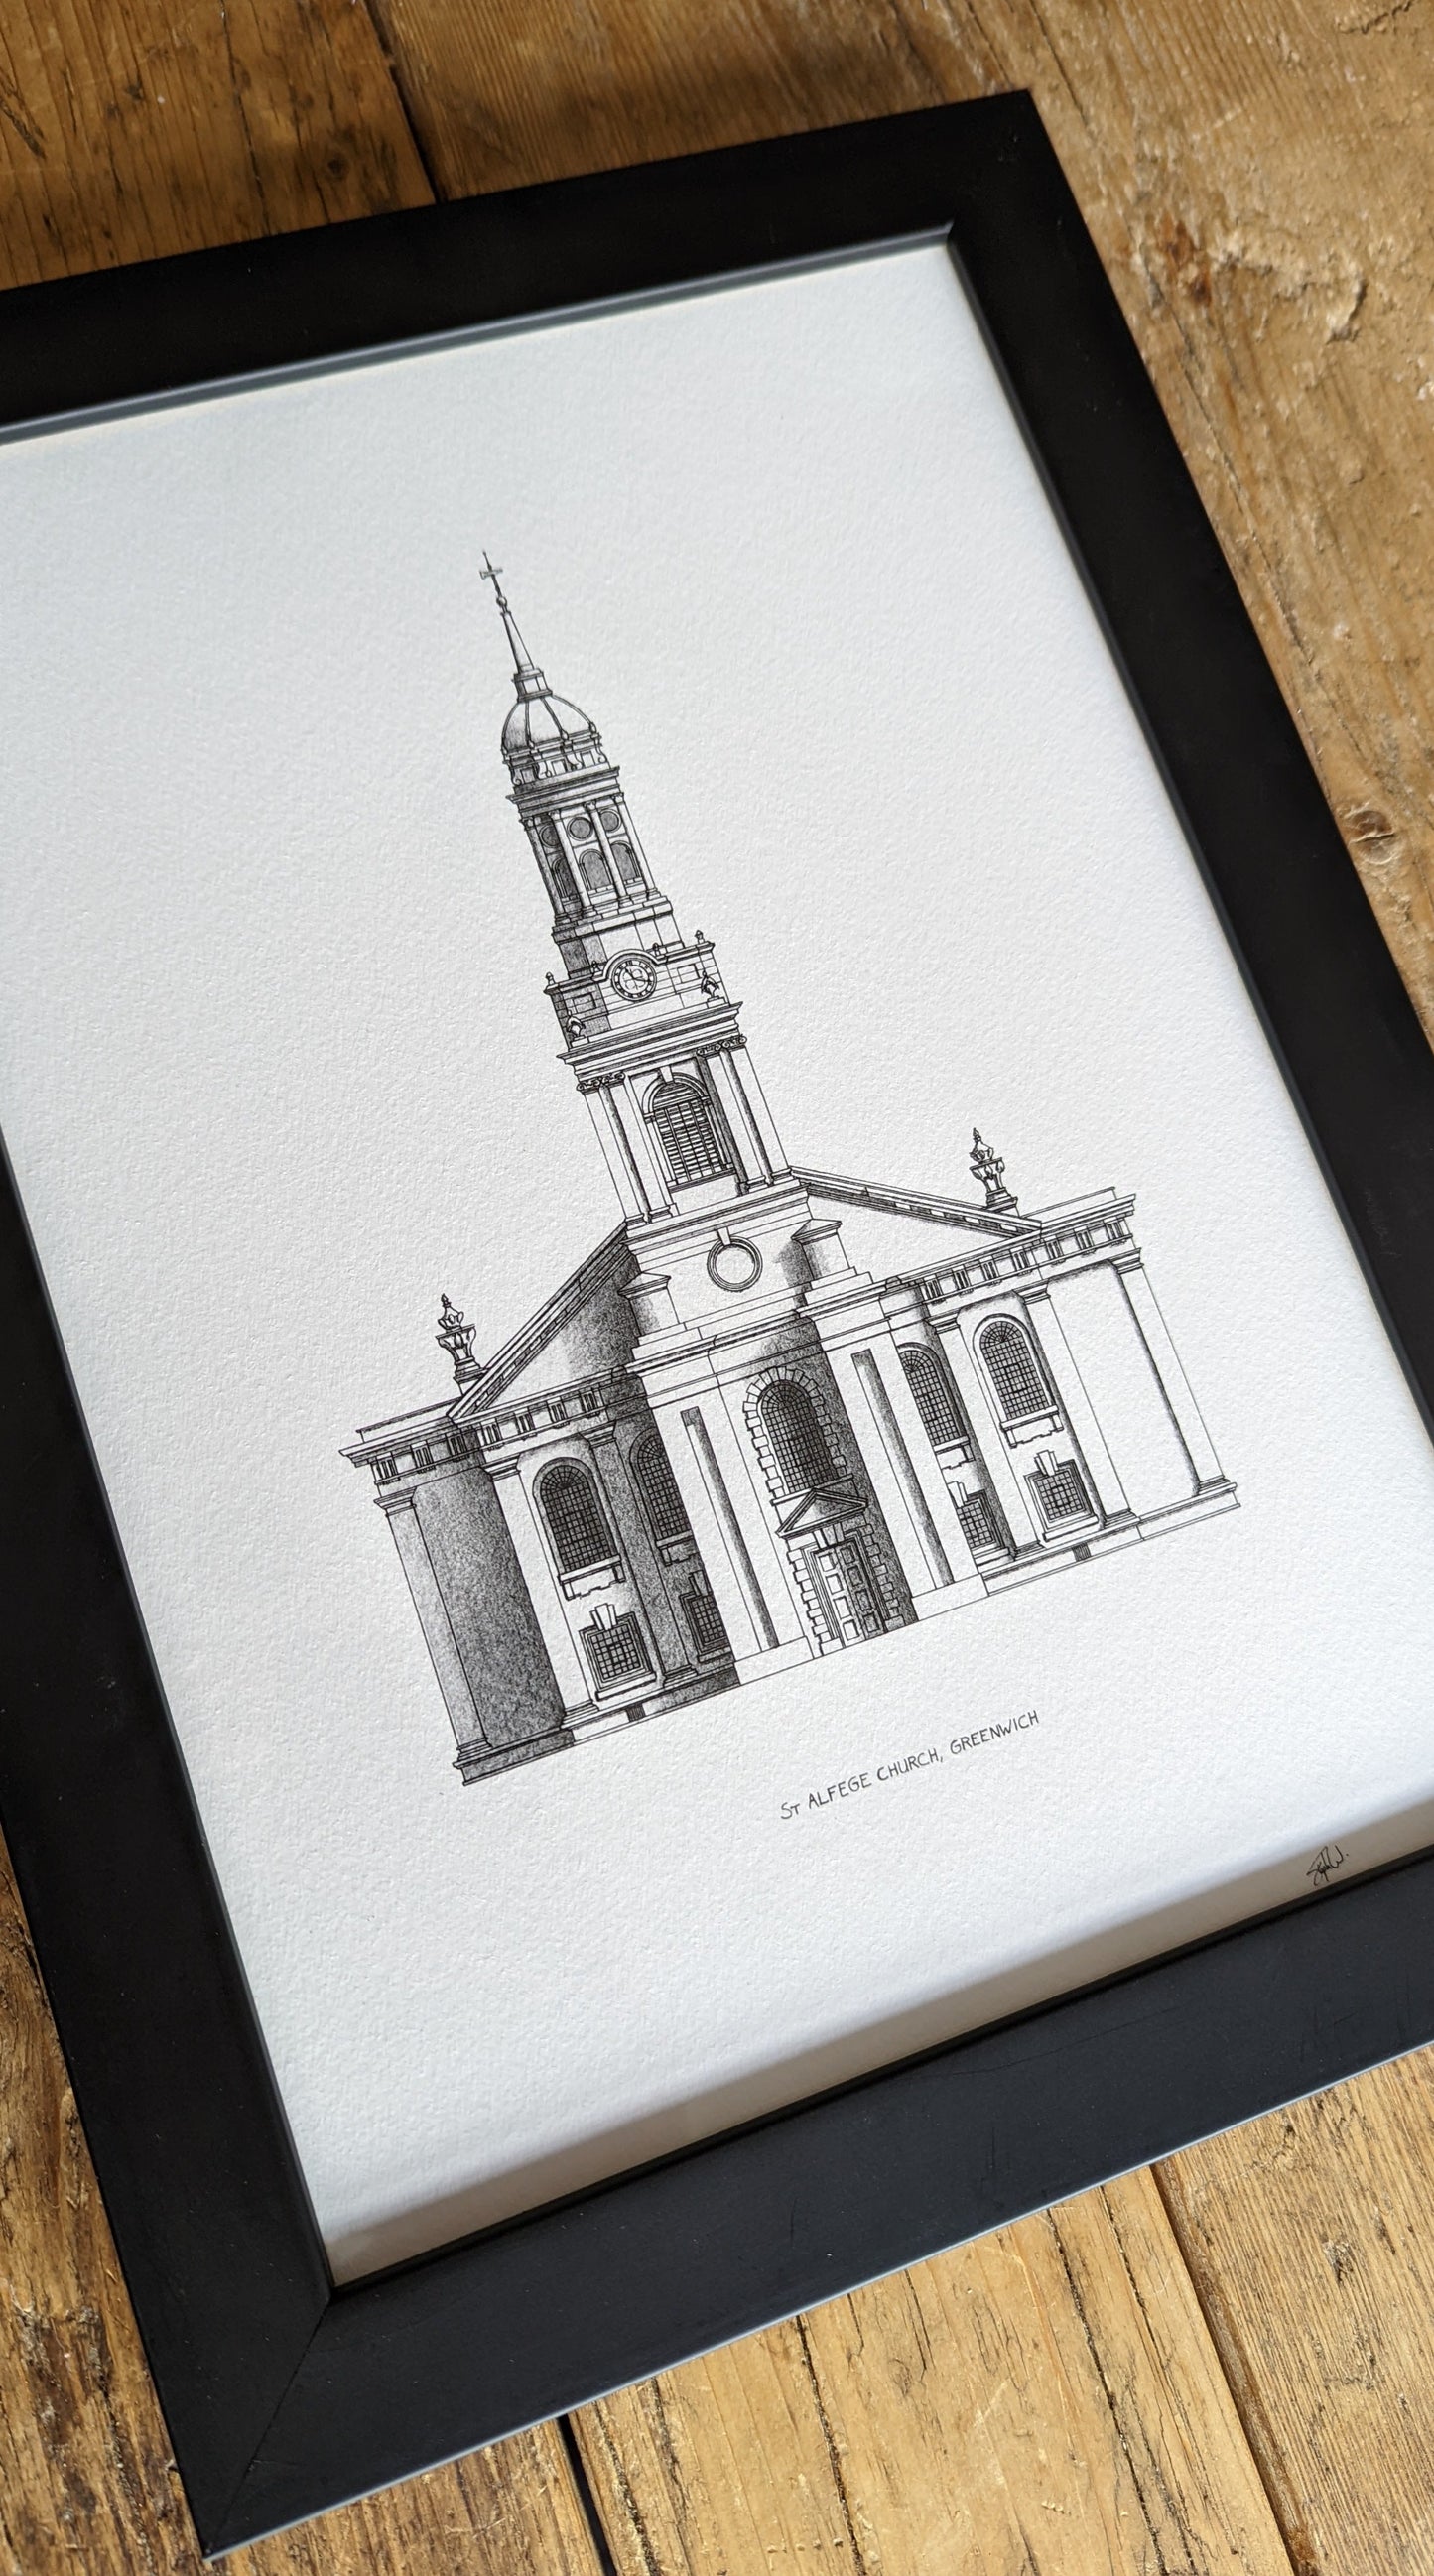 St Alfege Church, Greenwich - High Quality Architecture Print